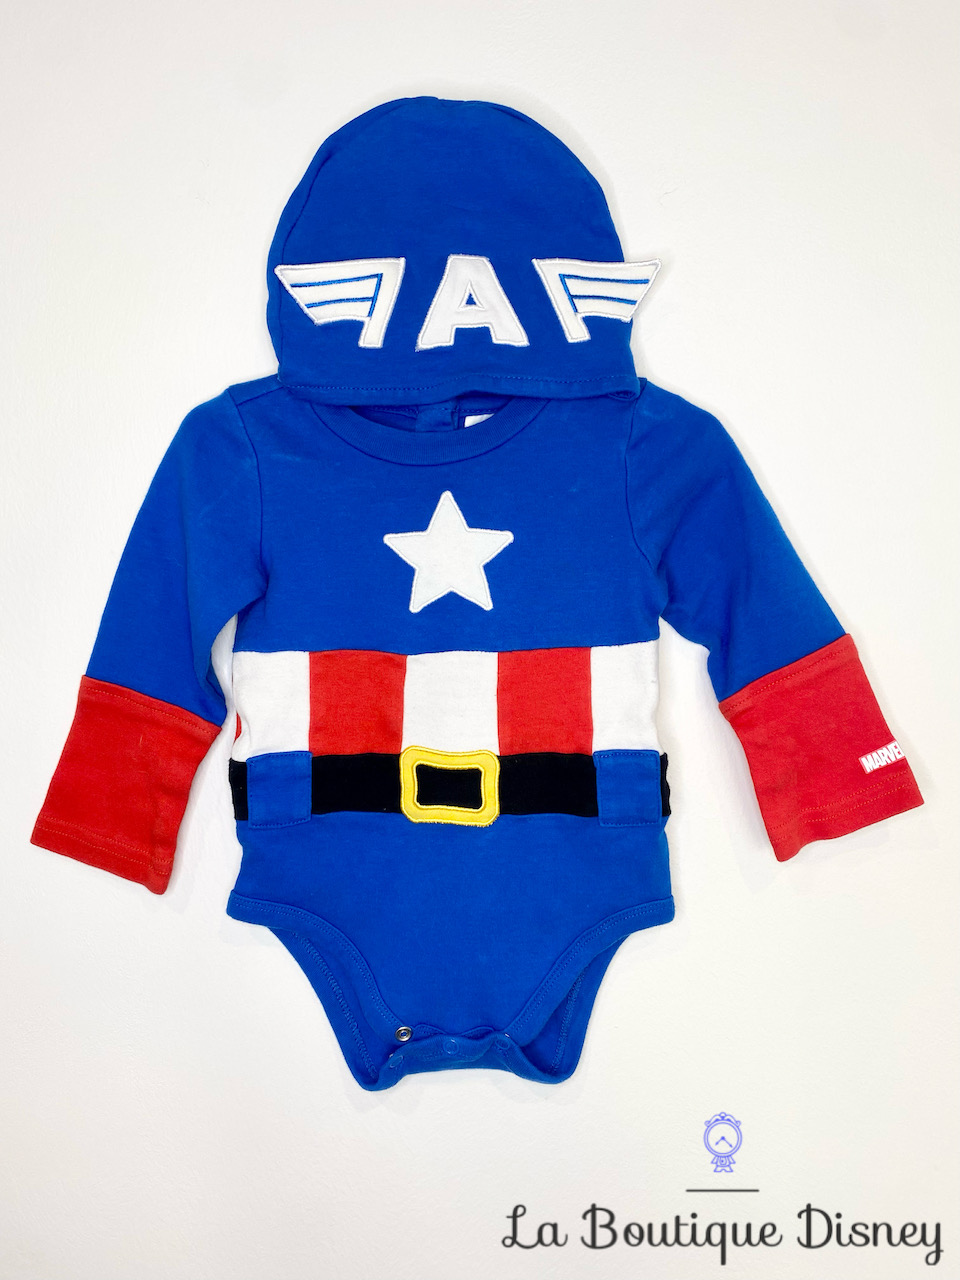 Body Déguisement Captain America Marvel Disney Baby by Disney Store taille 12-18 mois Avengers bleu blanc rouge